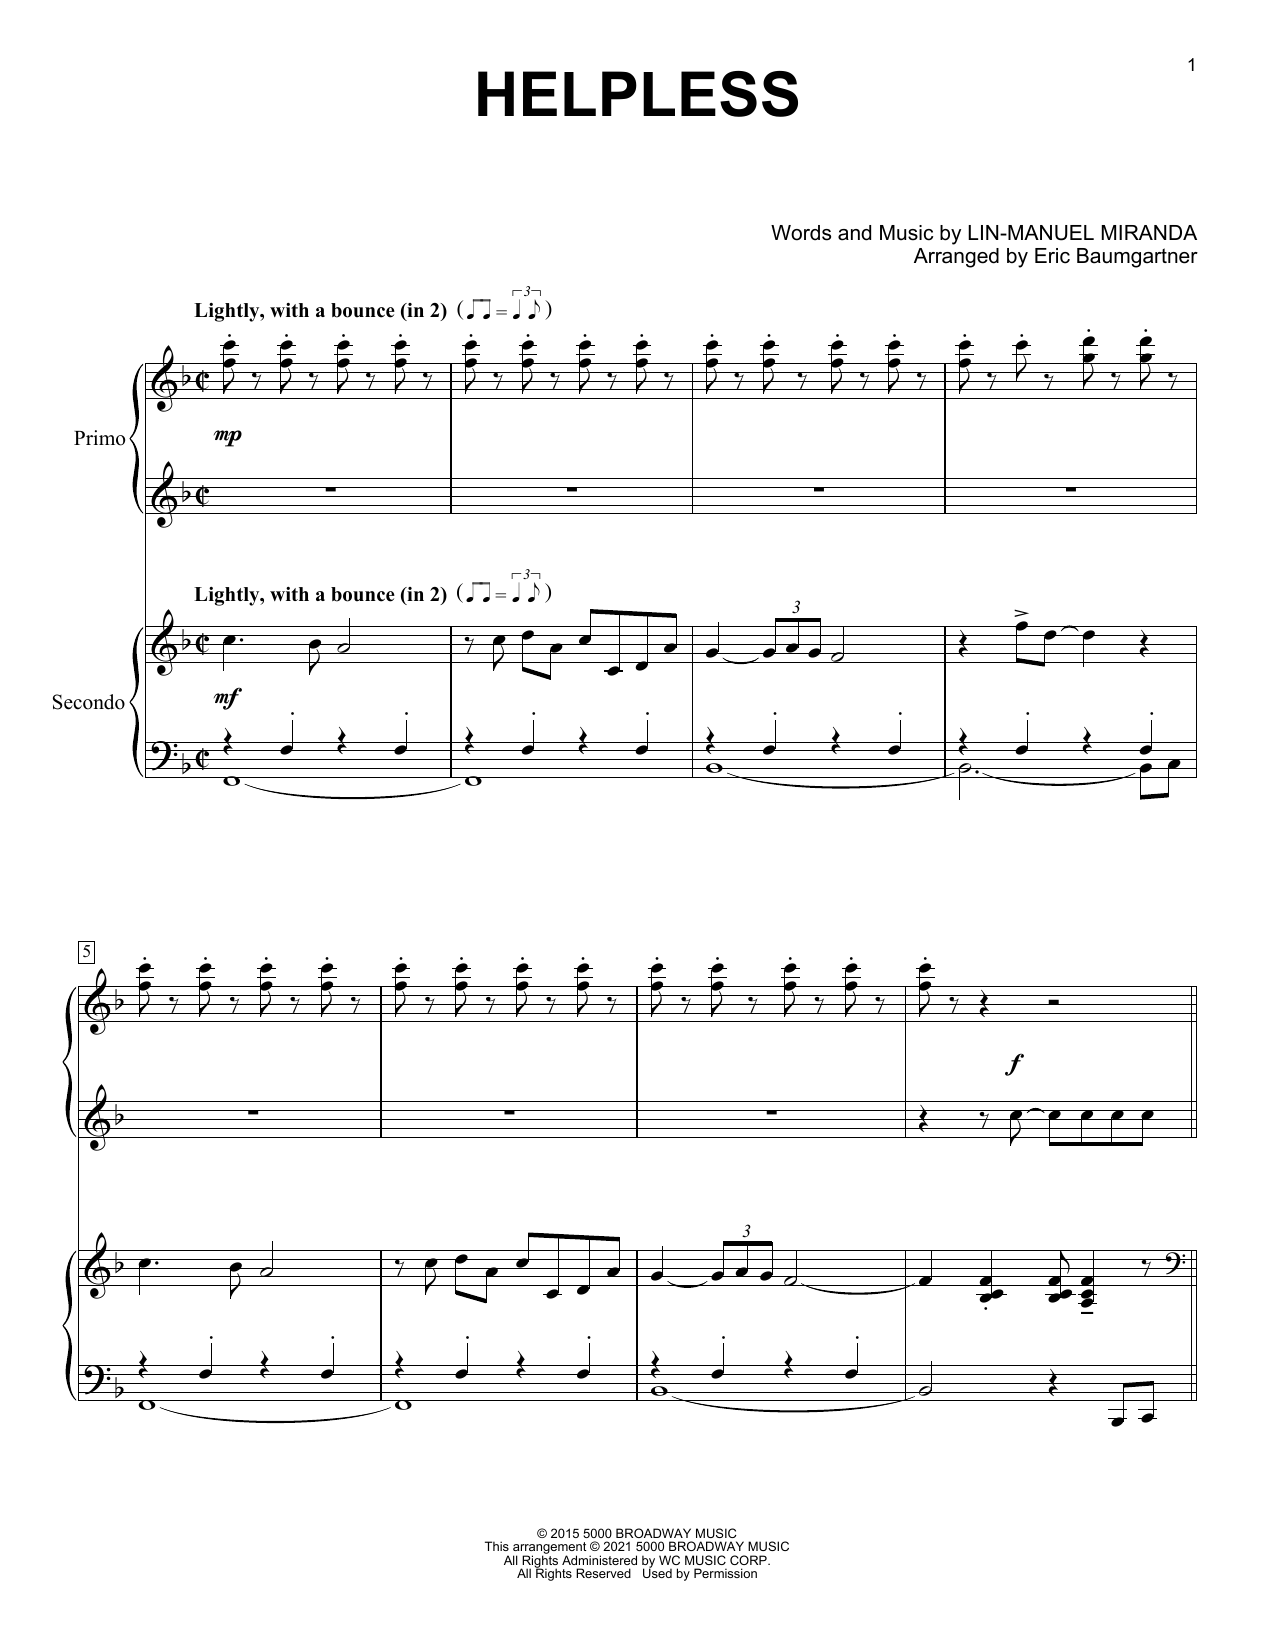 Lin-Manuel Miranda Helpless (from Hamilton) (arr. Eric Baumgartner) Sheet Music Notes & Chords for Piano Duet - Download or Print PDF